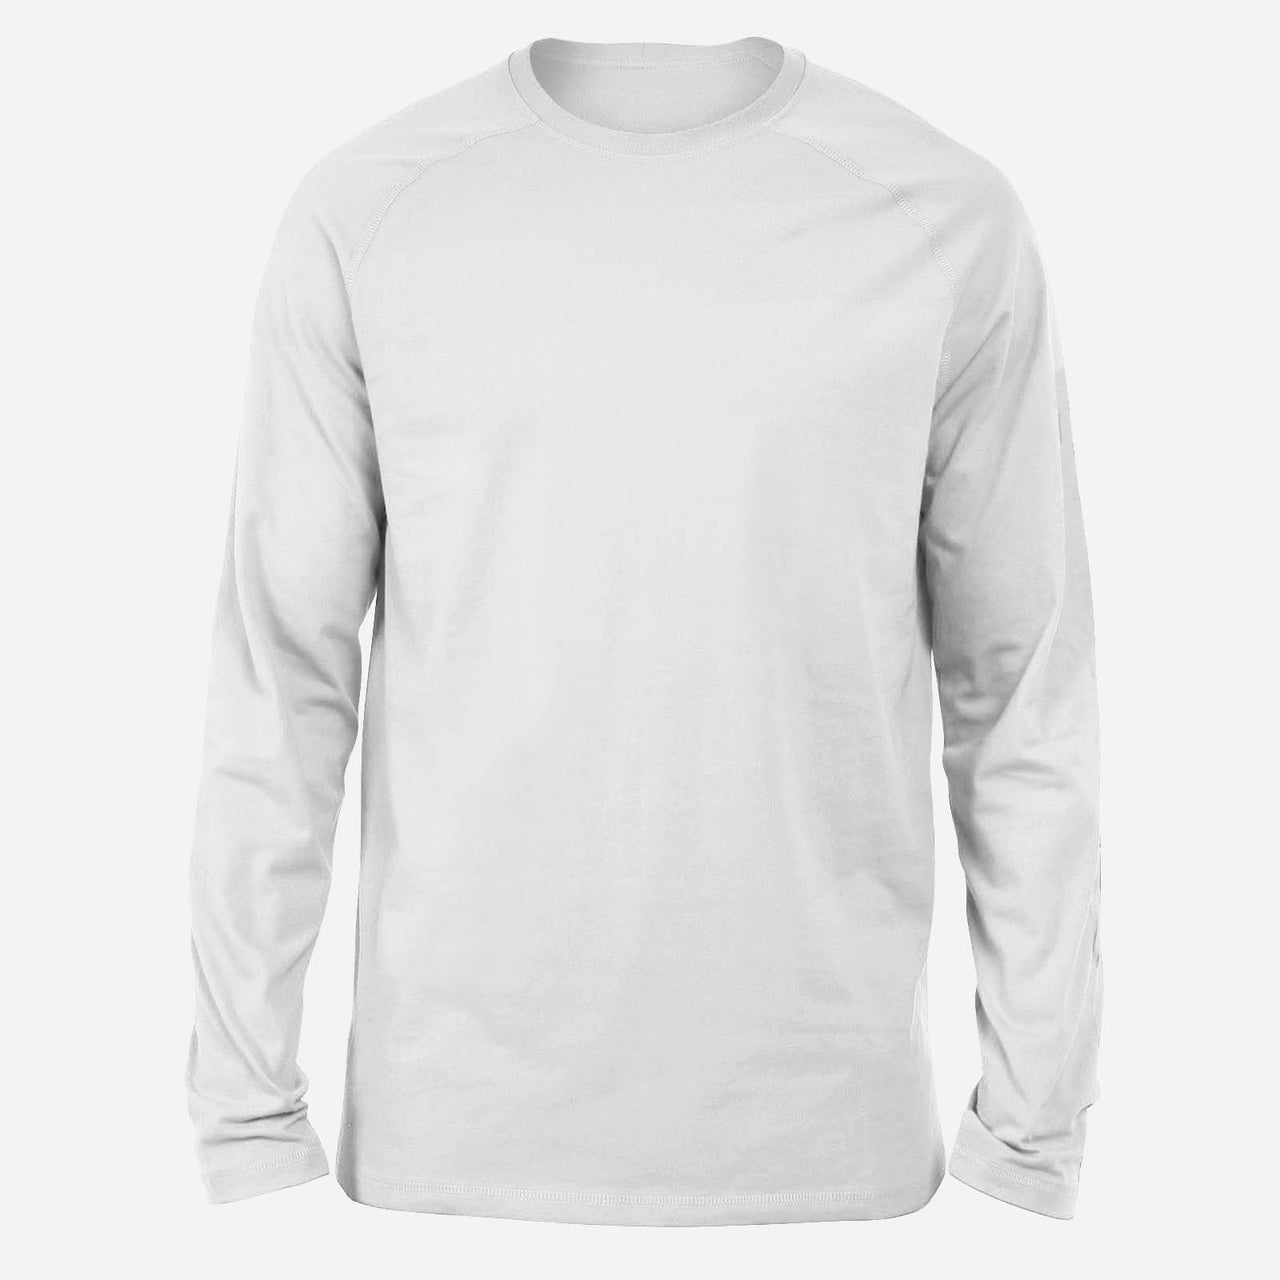 NO Design Super Quality Long-Sleeve T-Shirts